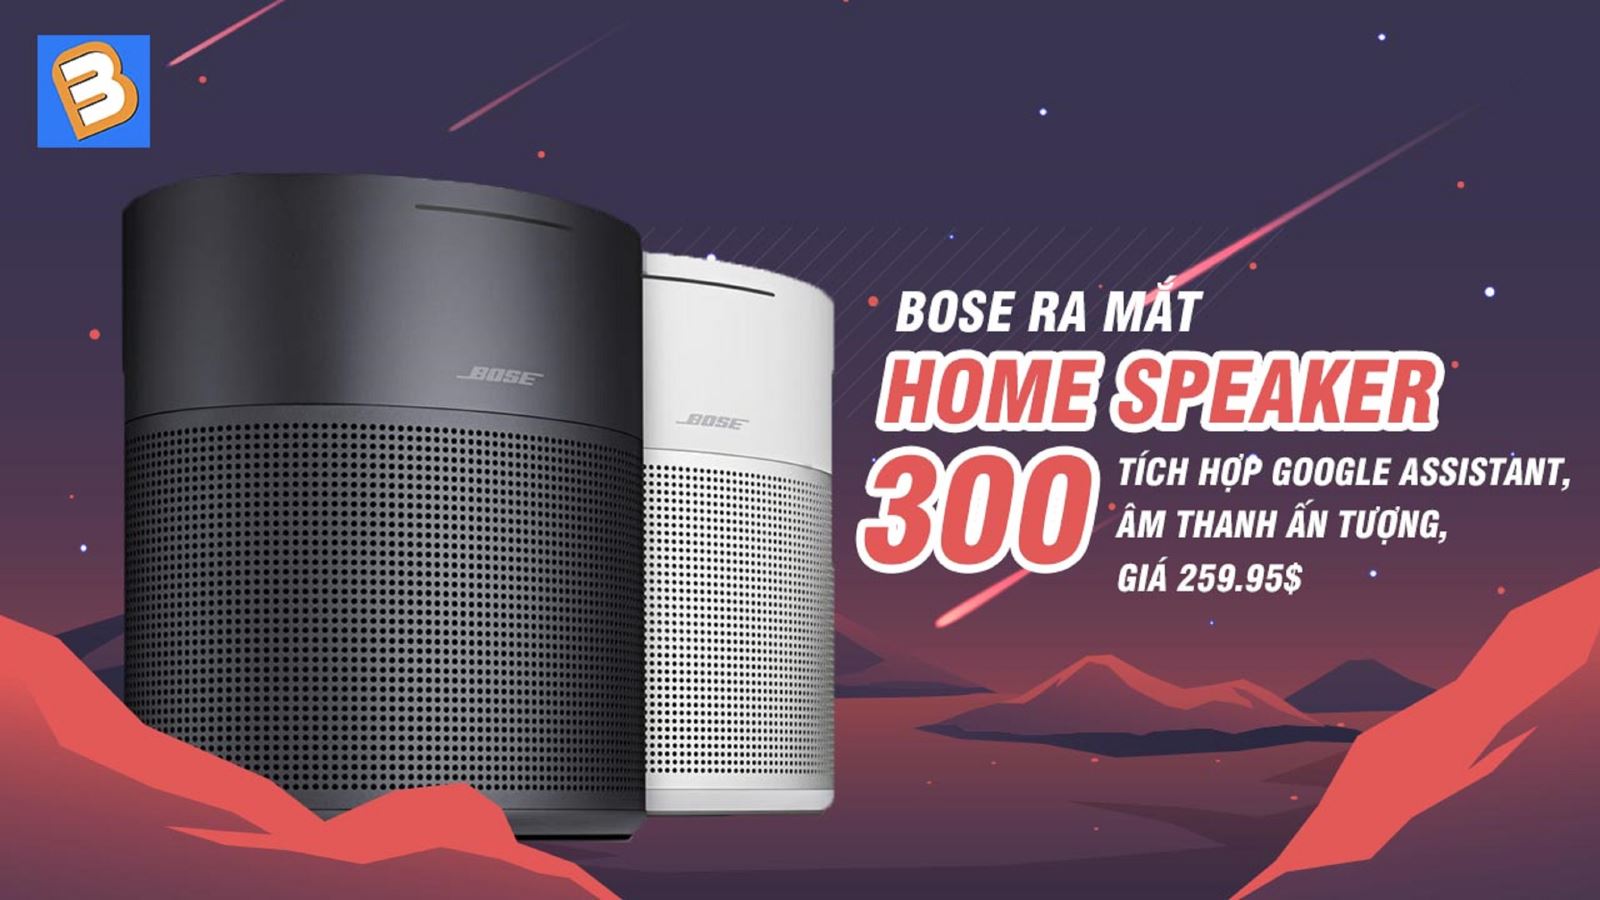 Bose ra mắt Home Speaker 300: Tích hợp Google Assistant, âm thanh ấn tượng, giá 259.95$